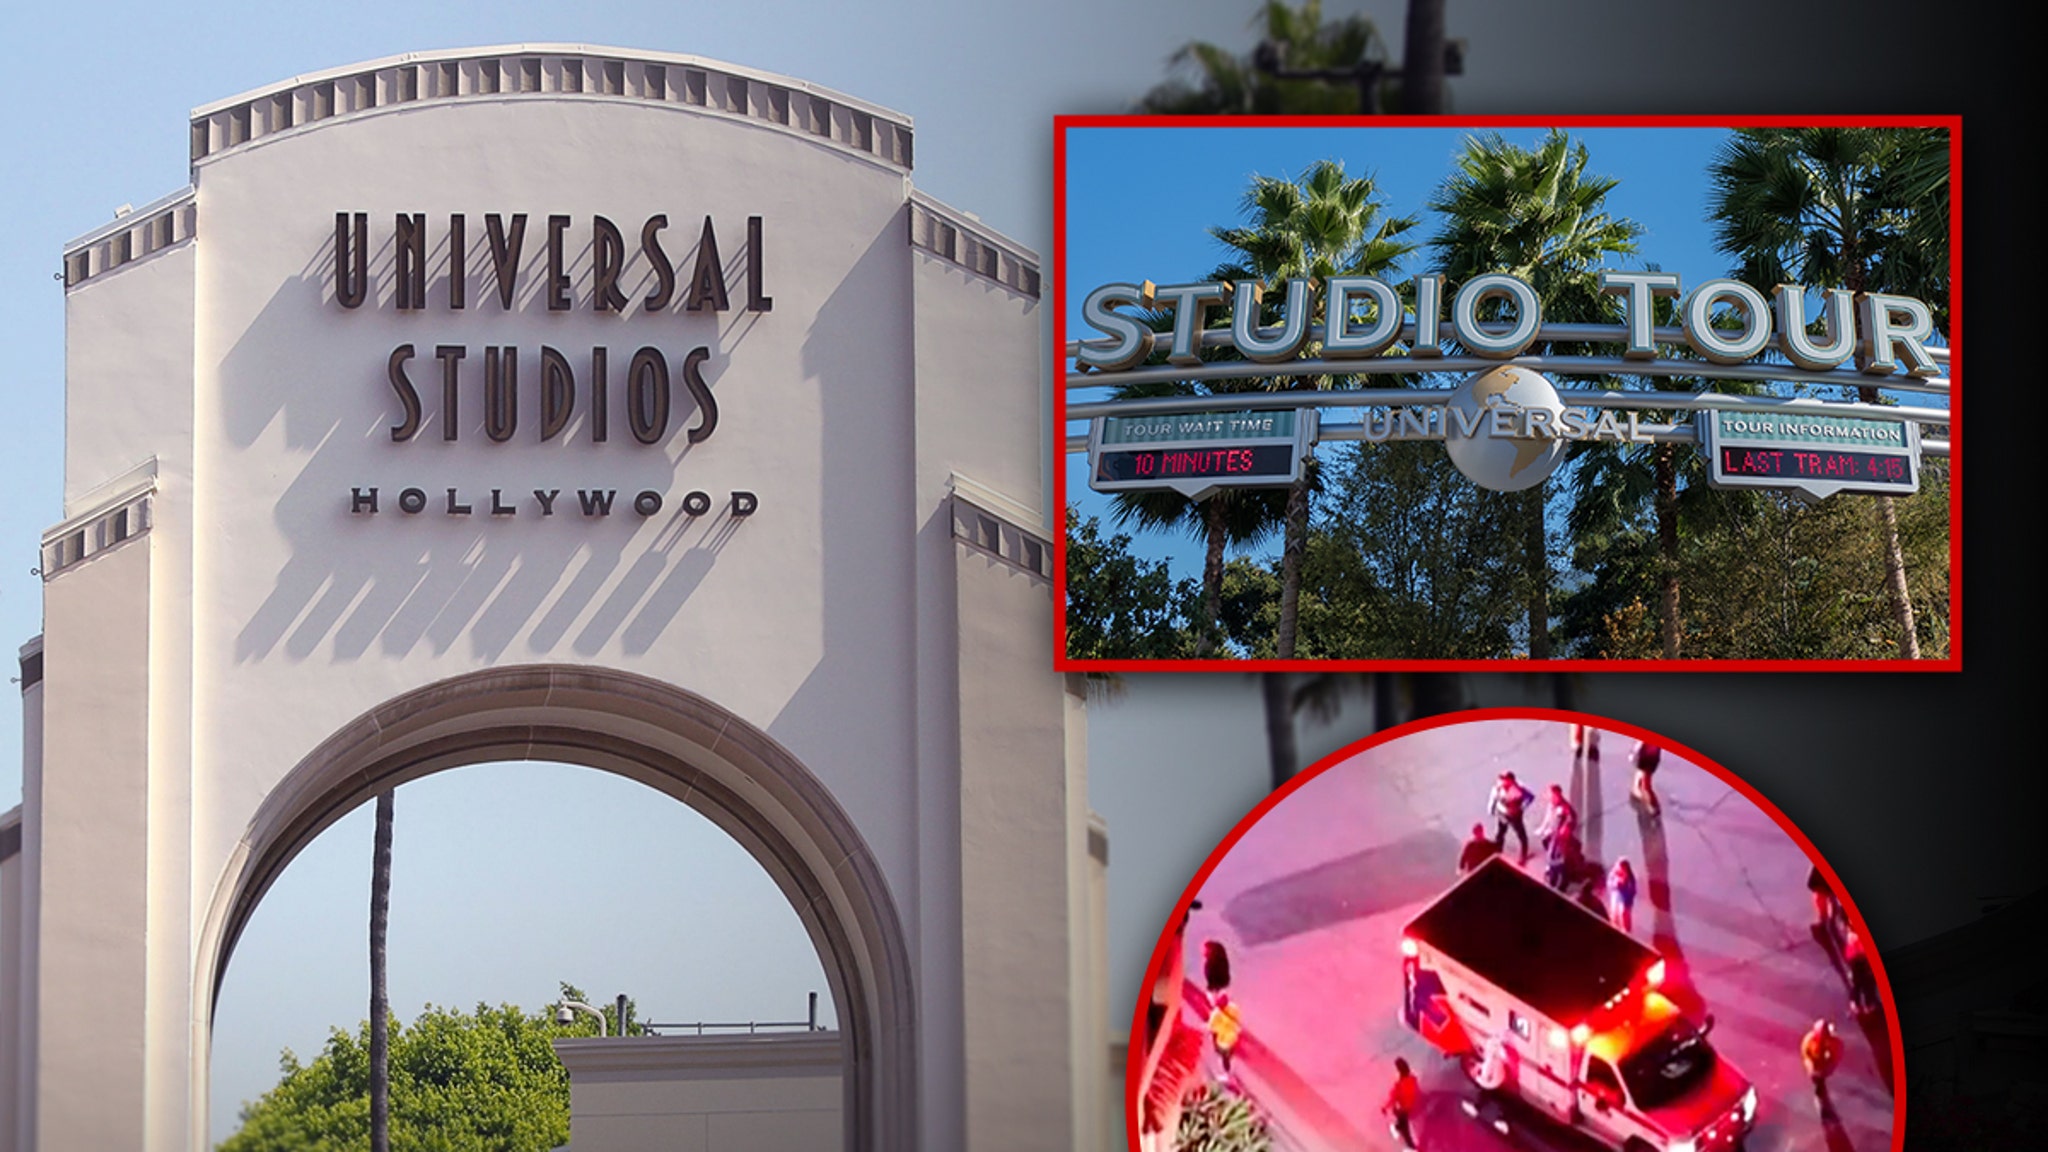 Universal Studios Tram Crashes, 15 Injured, 1 Critical